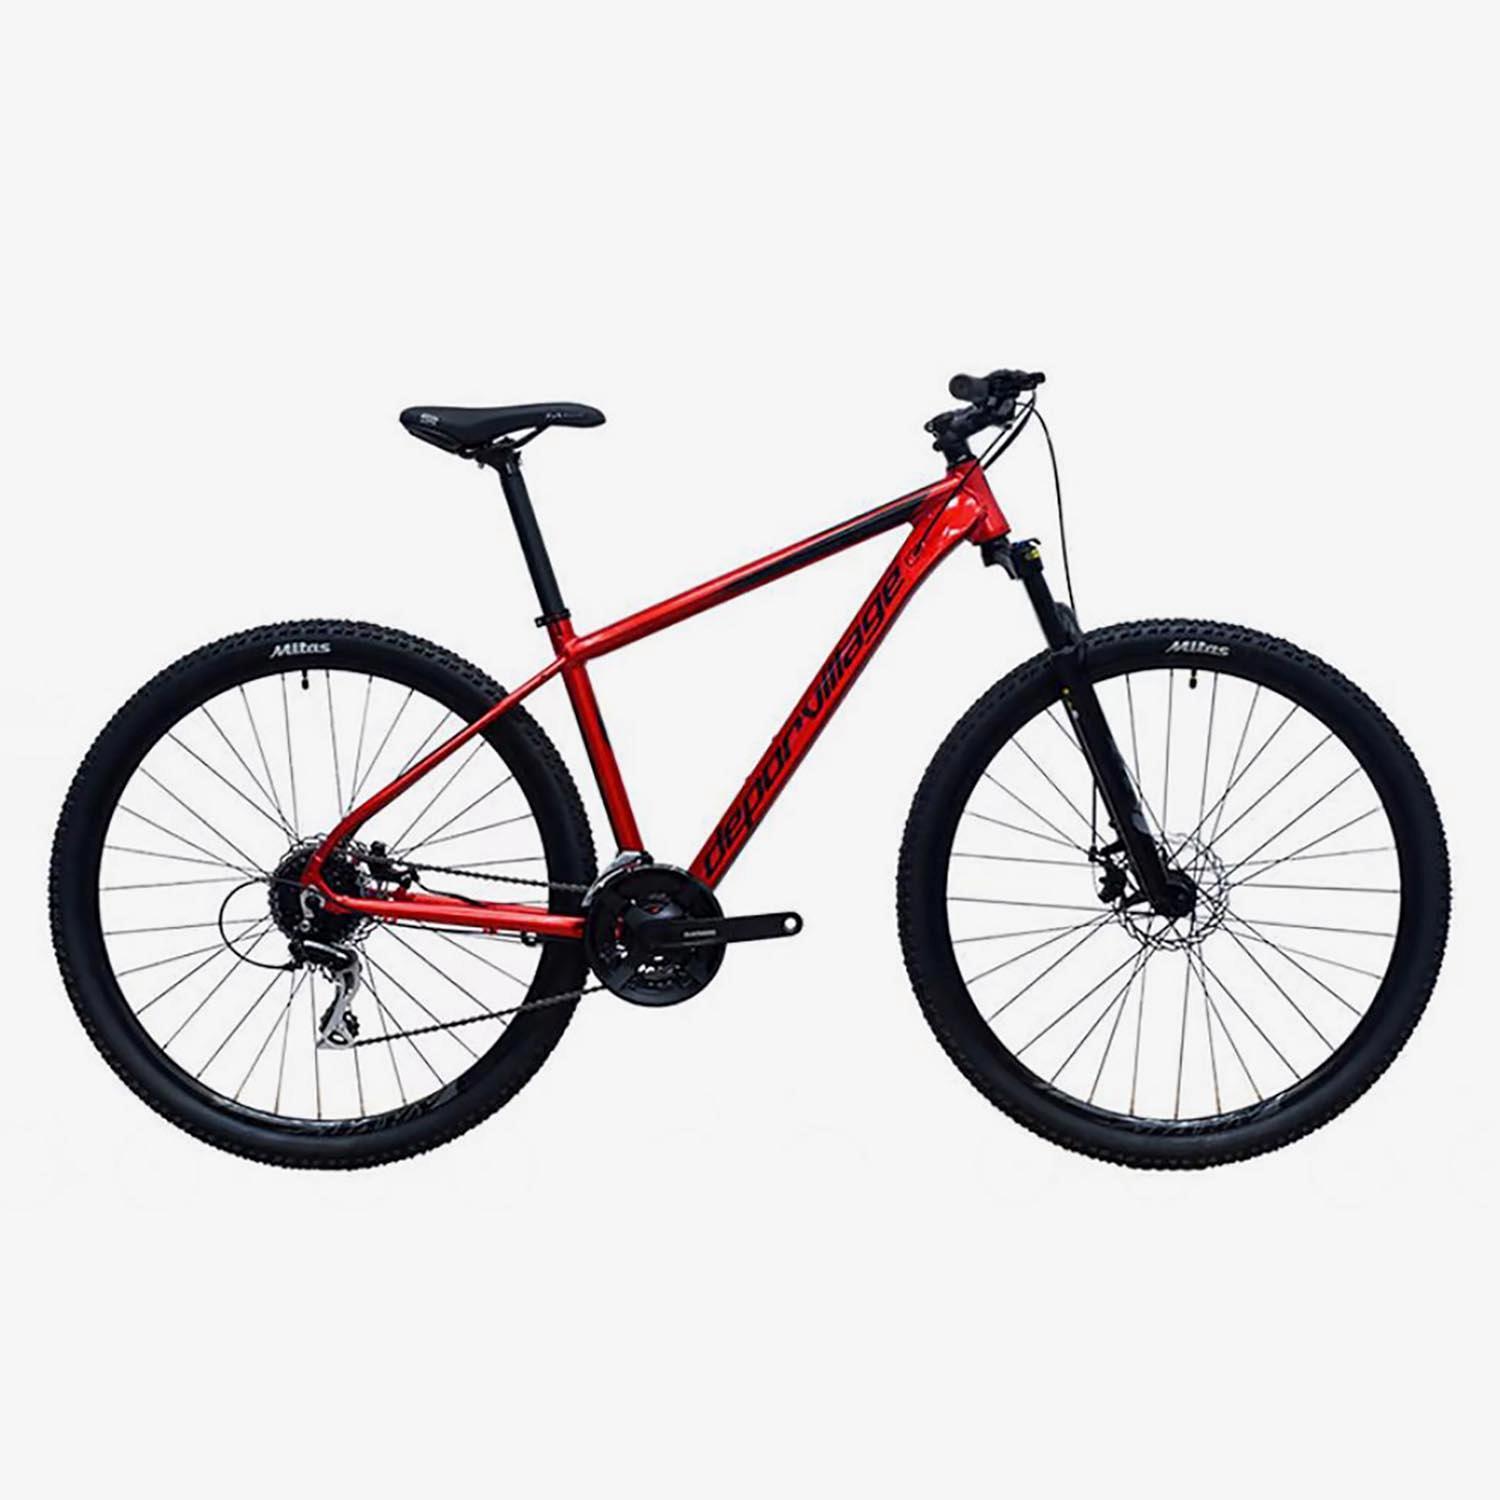 Deporvillage Sl100 29 - Rouge - Vélo Montagne sports taille XL